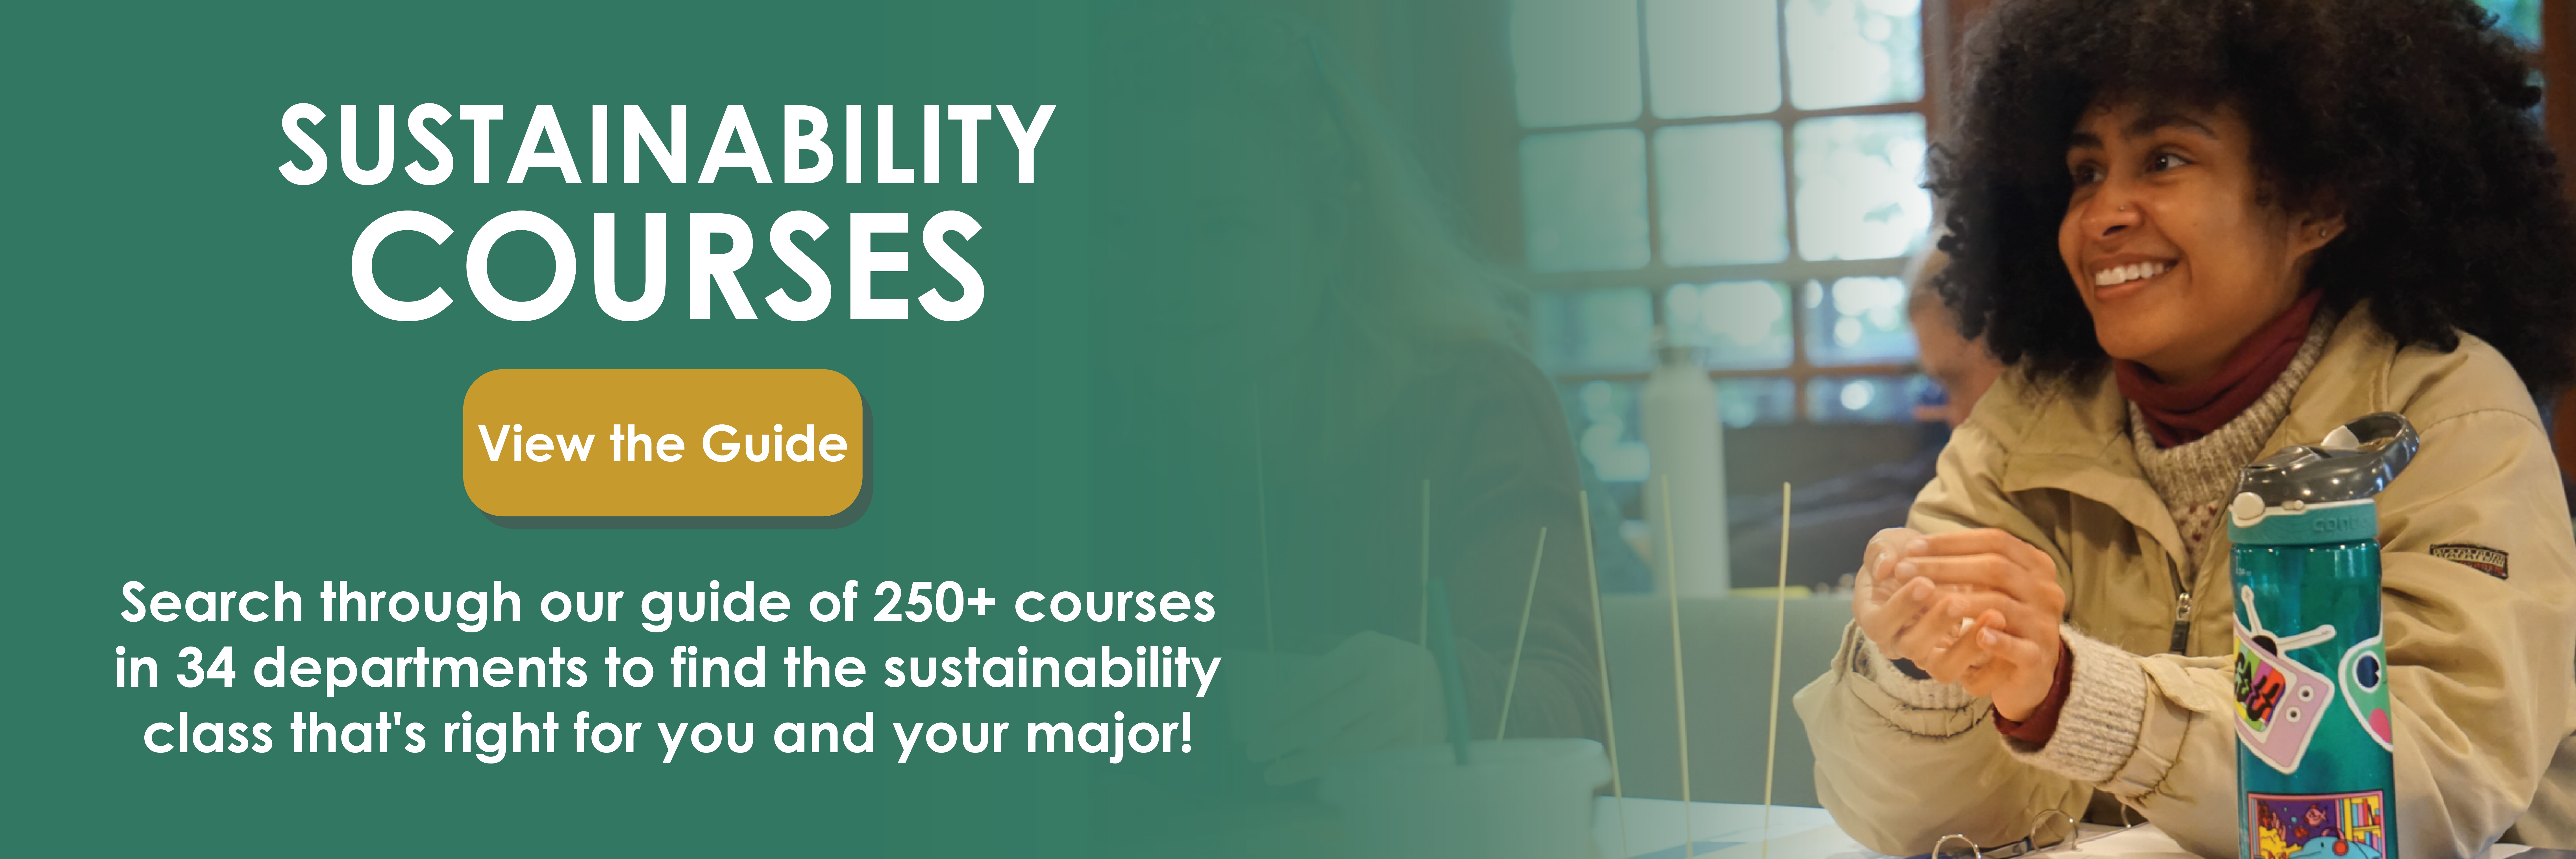 Sustainability Courses